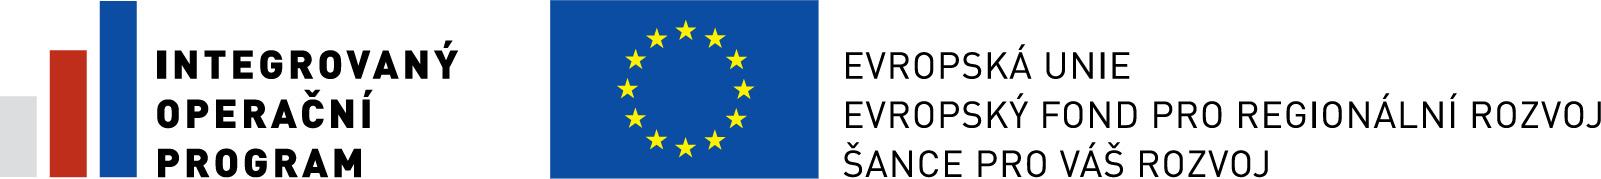 Integrovaný operační program - Evropská Unie: Evropský fond pro regionální rozvoj - šance pro váš rozvoj